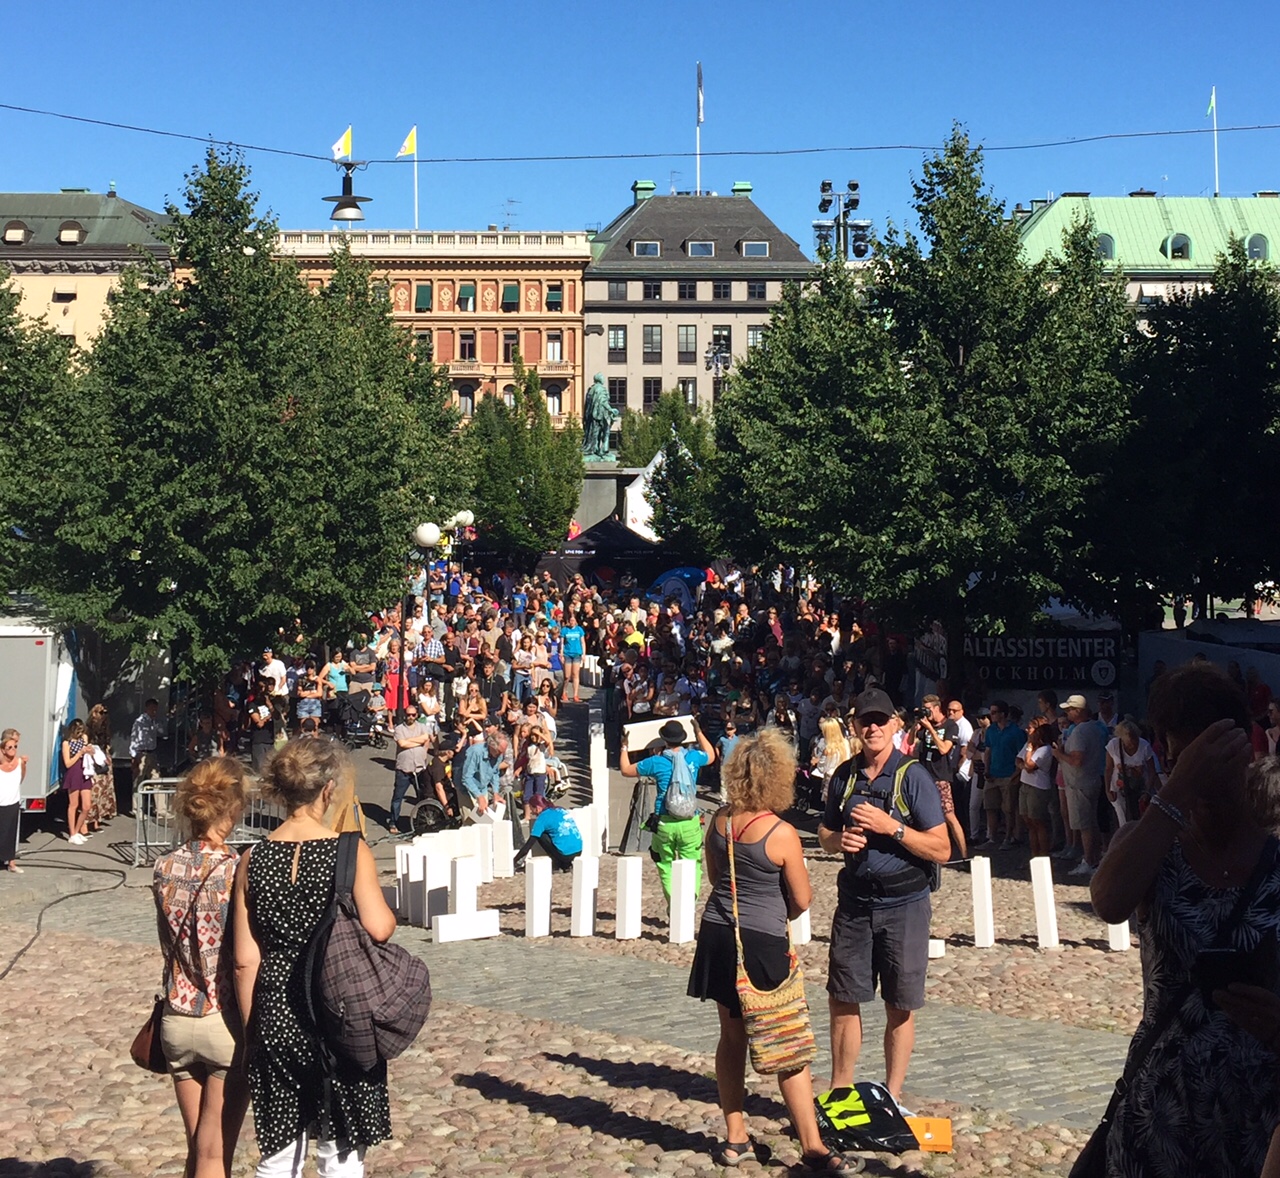 Dominoe i Stockholm